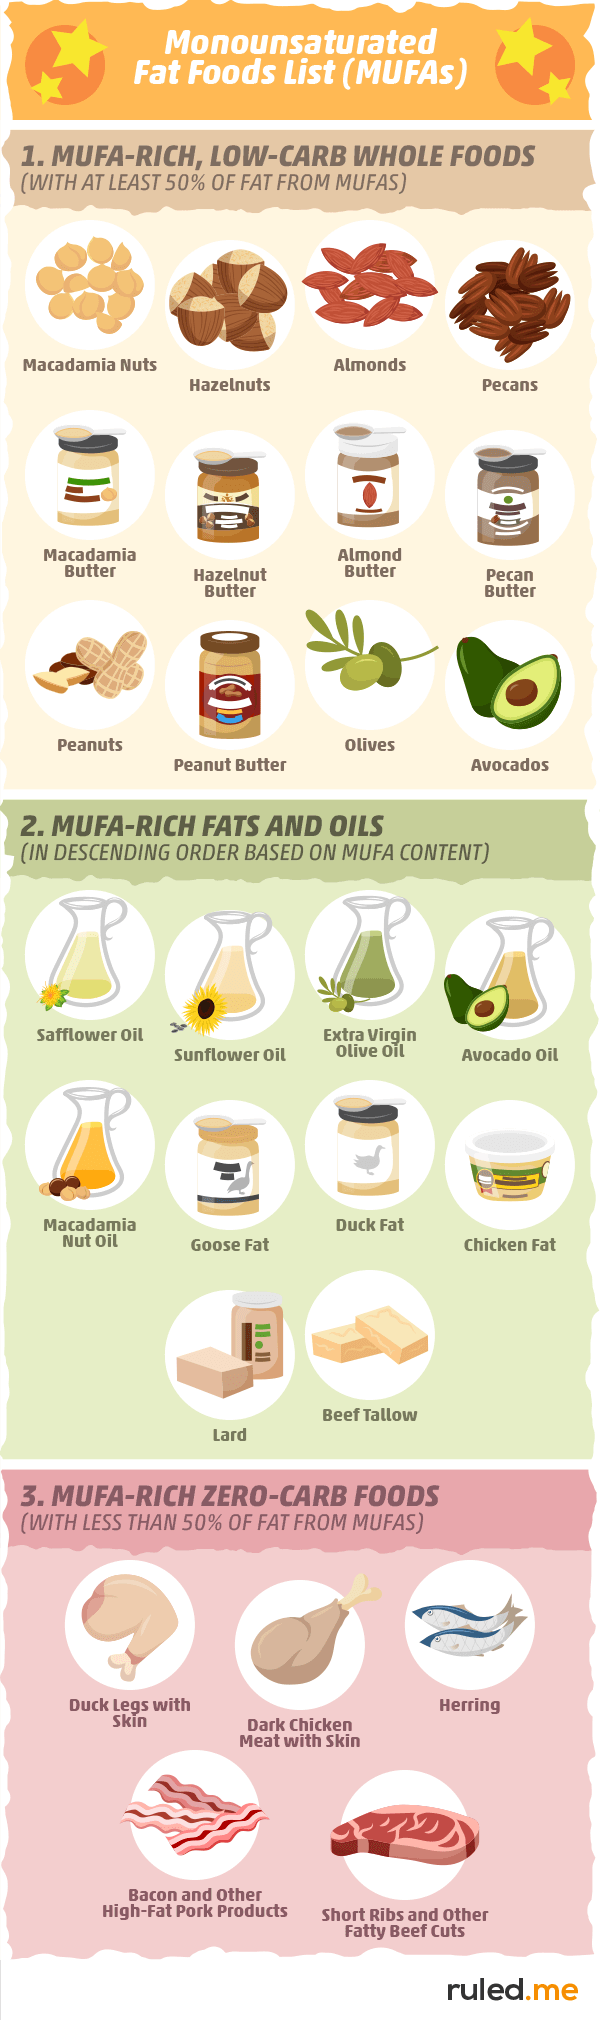 MUFA fatty acids in food sources